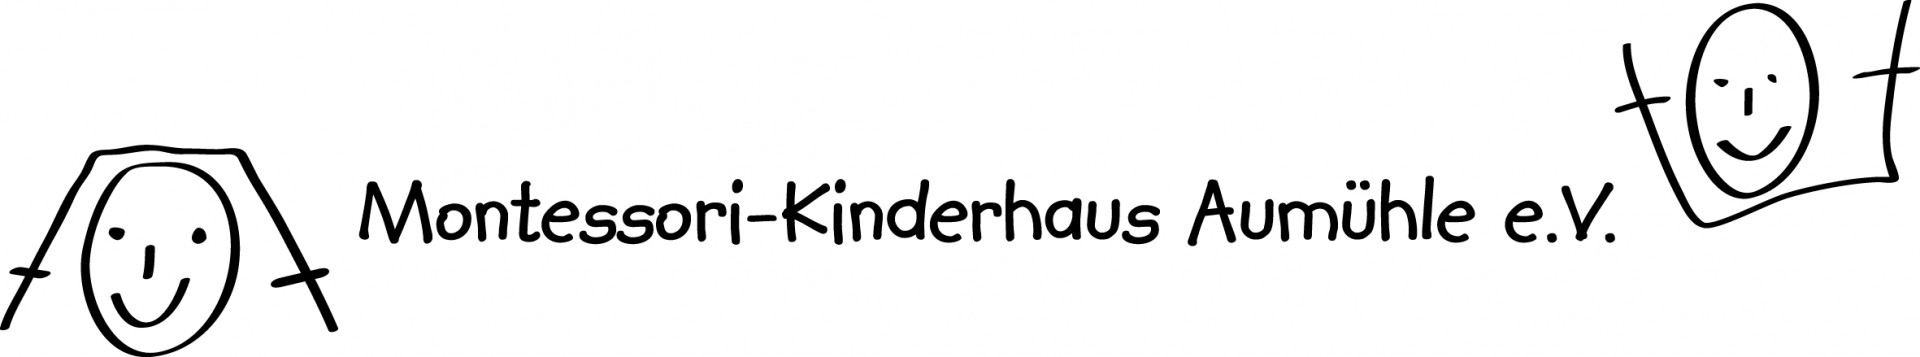 Logo Montessori final ohne 121026 1